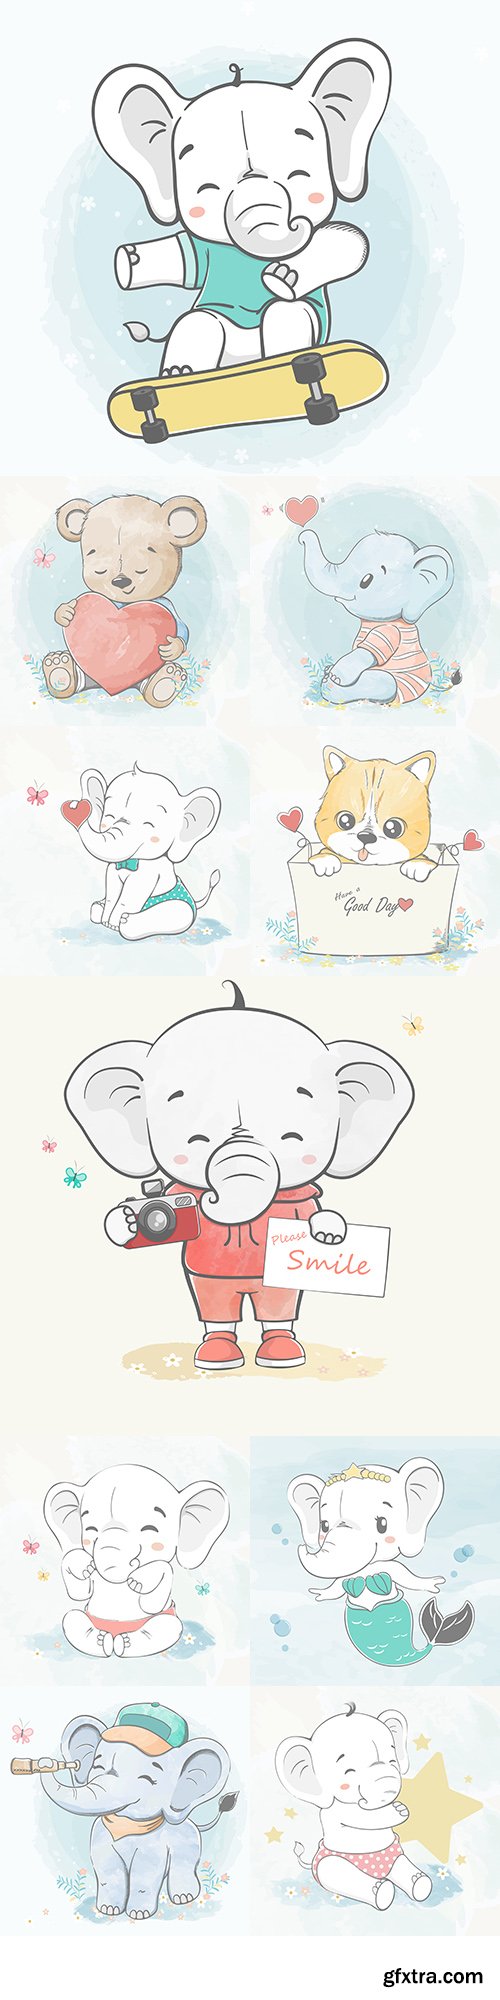 Cute elephant and friends cartoon watercolor